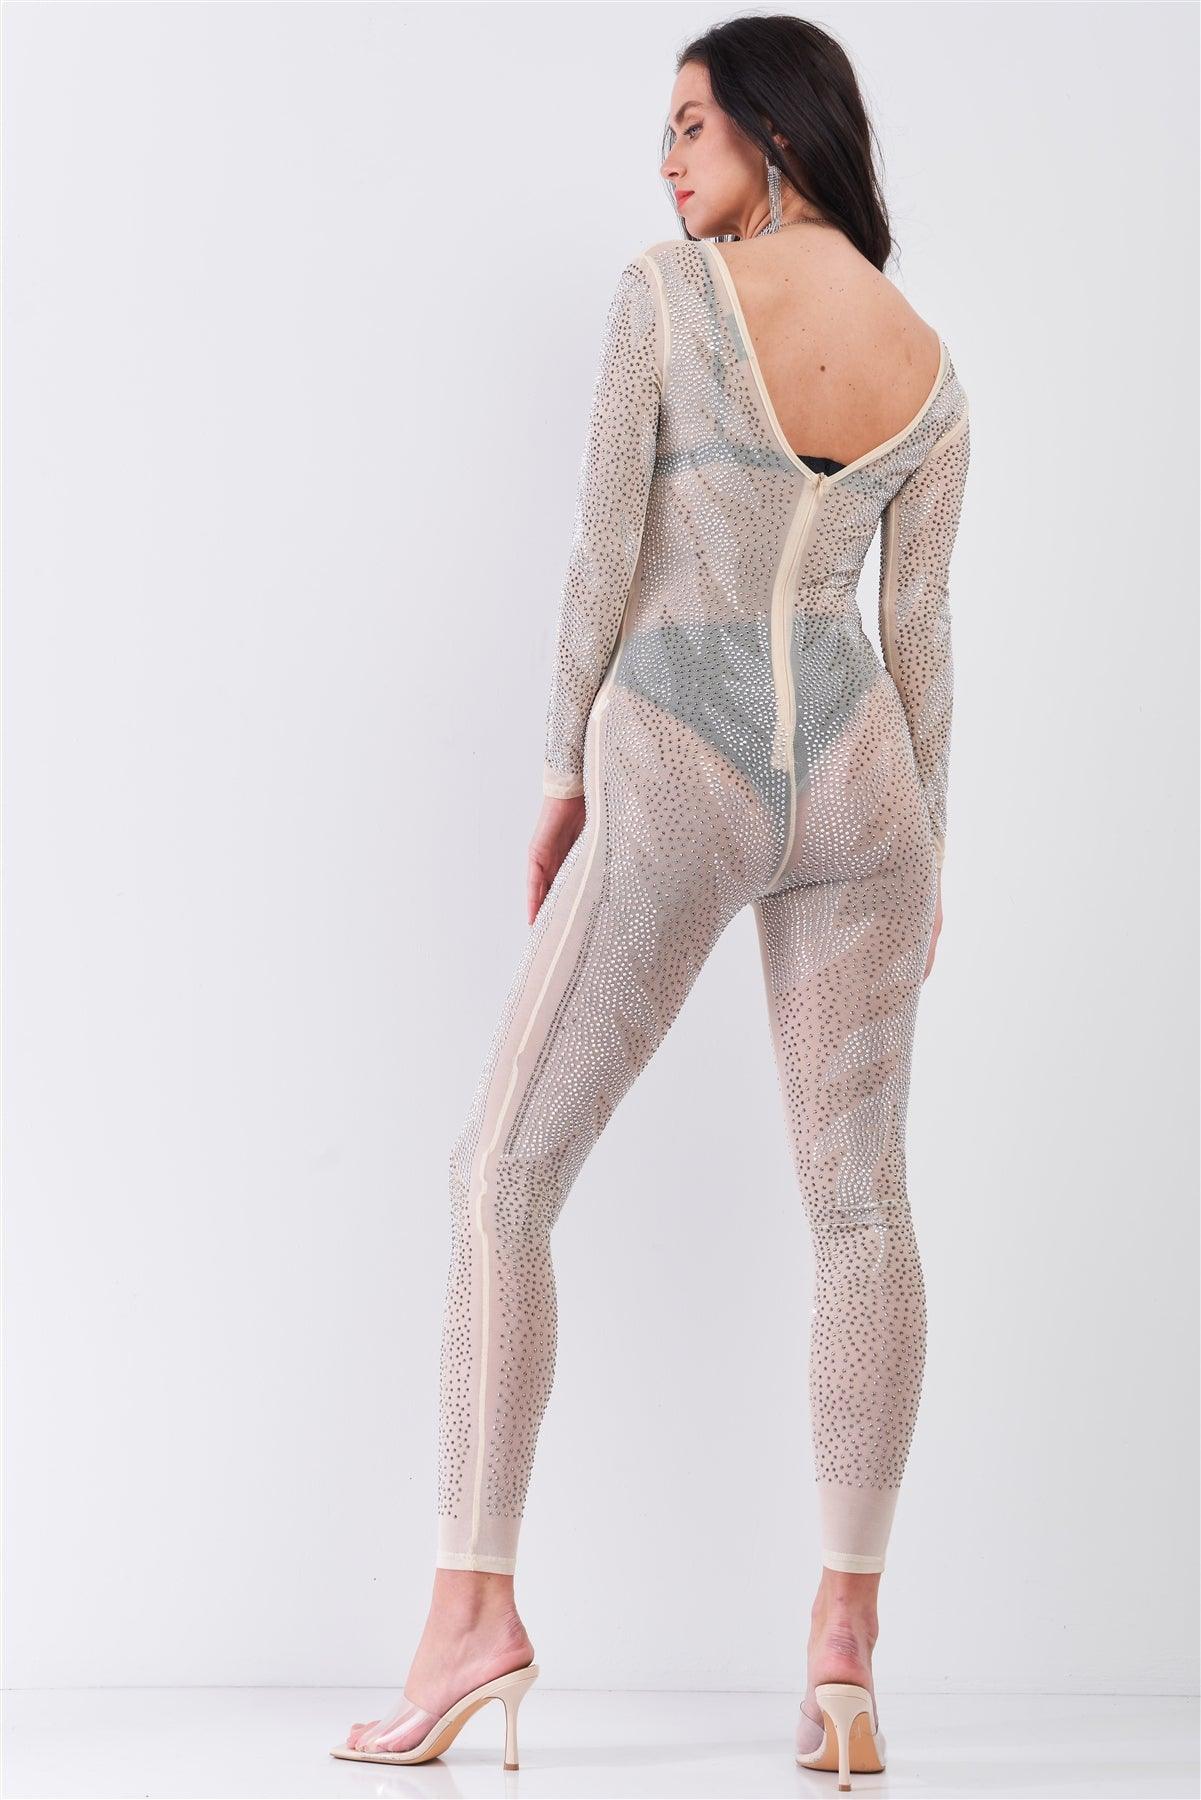 Wholesale Nude Rhinestone Embroidery Sheer Mesh Long Sleeve Bodycon Jumpsuit